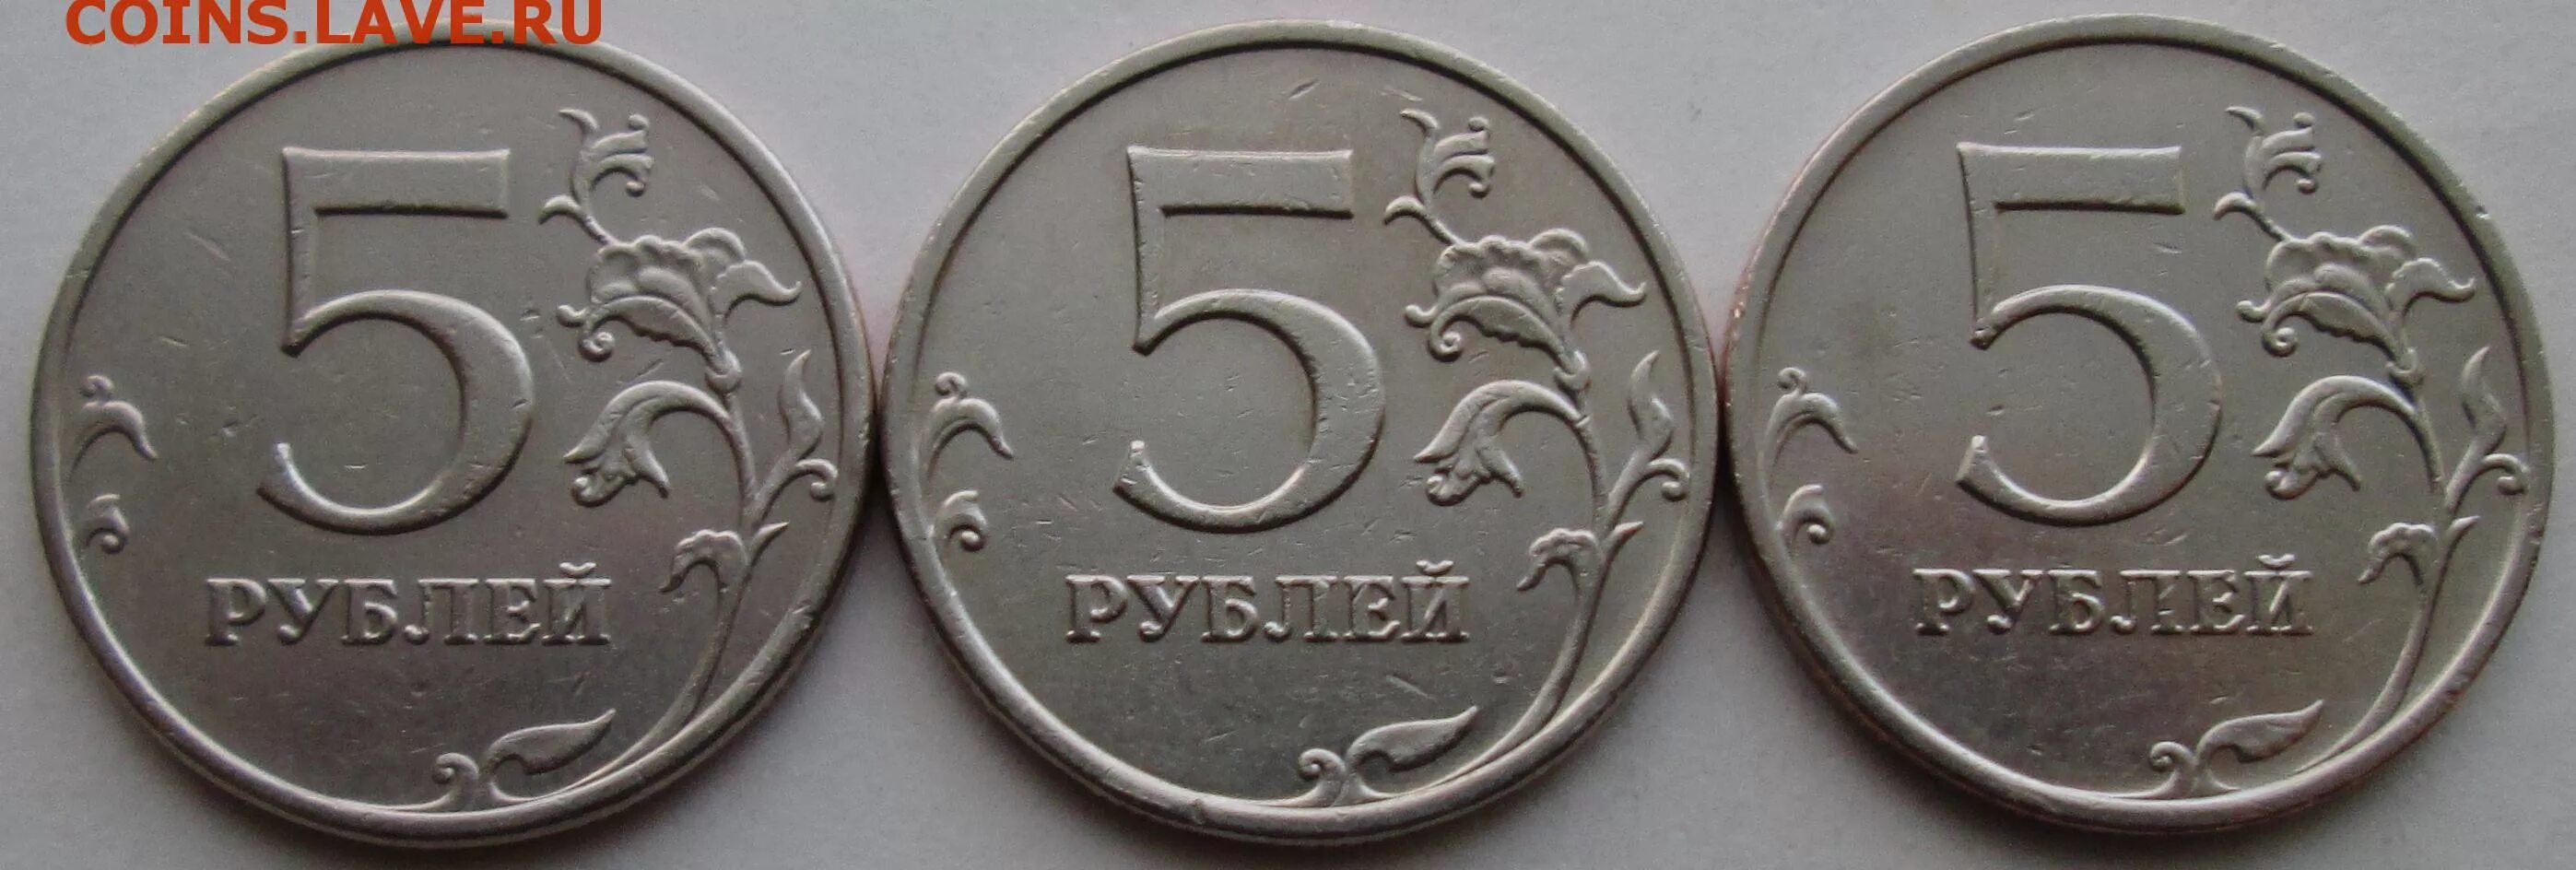 Старые 5 рублей. 5 Рублей большие. 3 Шт 1. 5руб 2009г СПМД магнитная цена на аукционе. Ас24-5-1.